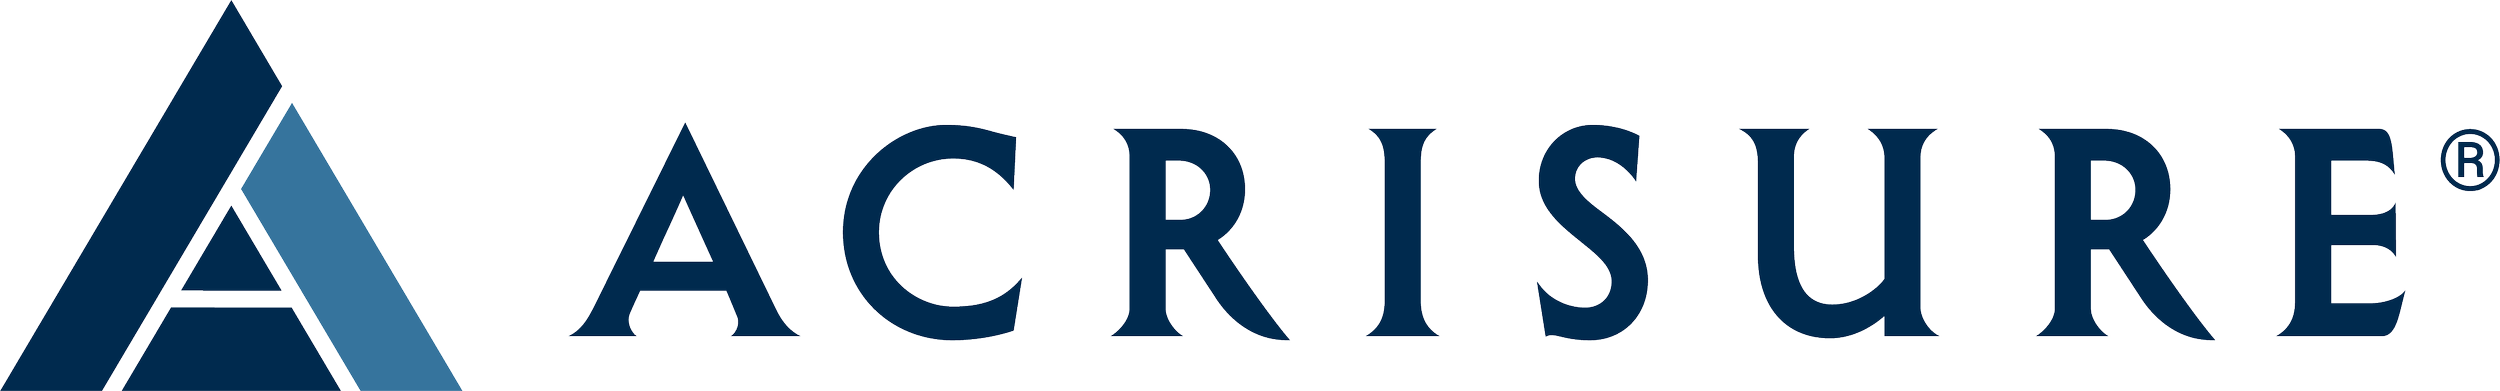 Acrisure Logo (Blue Horizontal).png